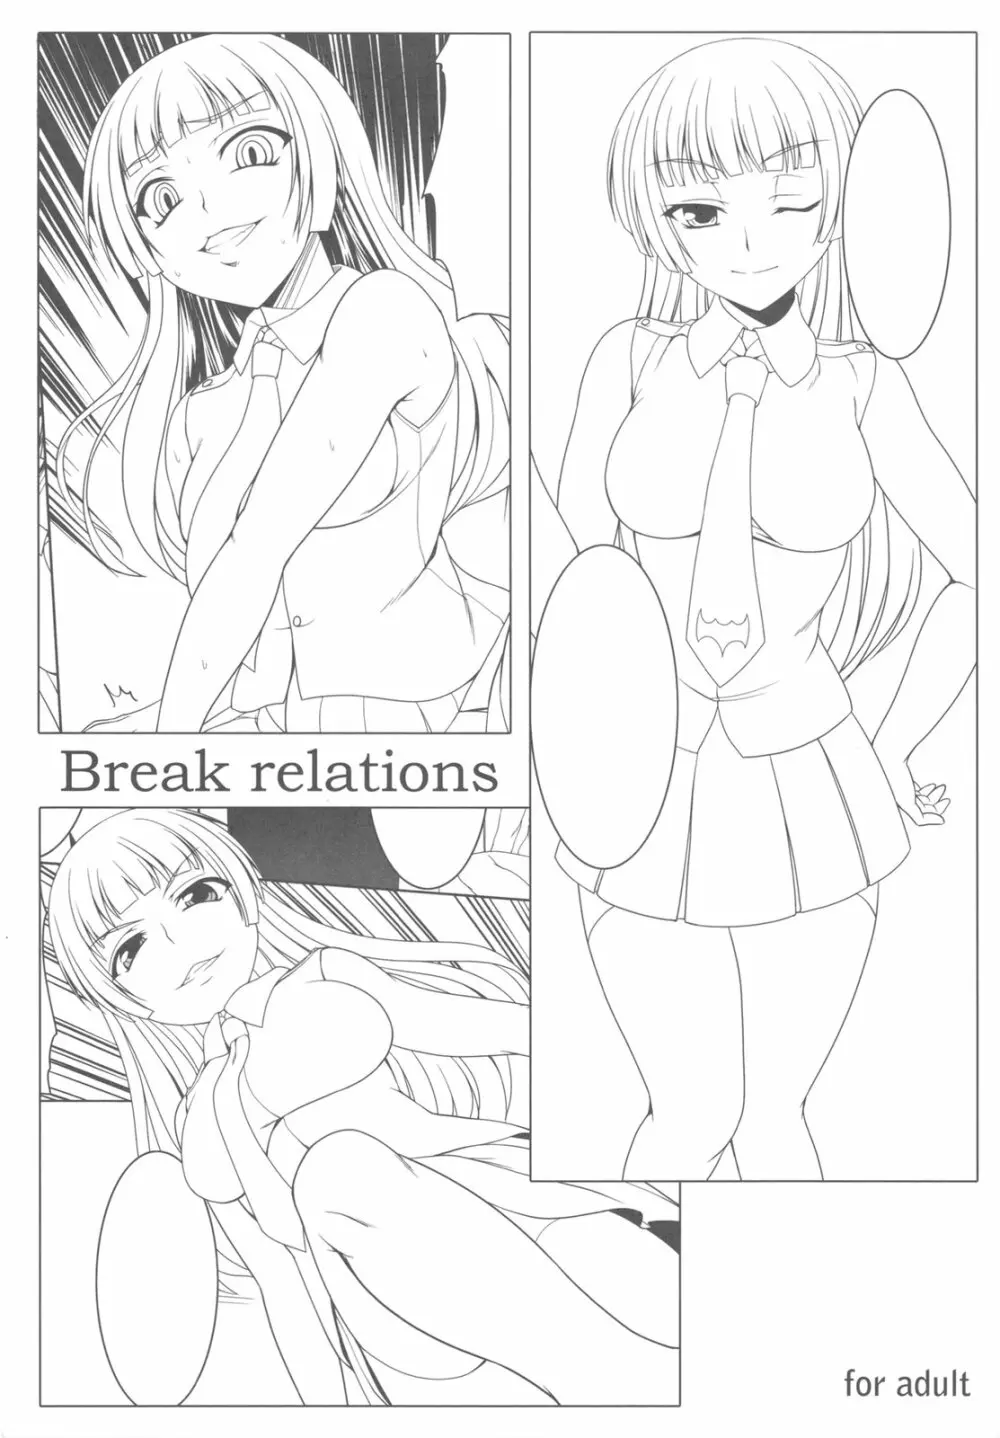 Break relations - page1